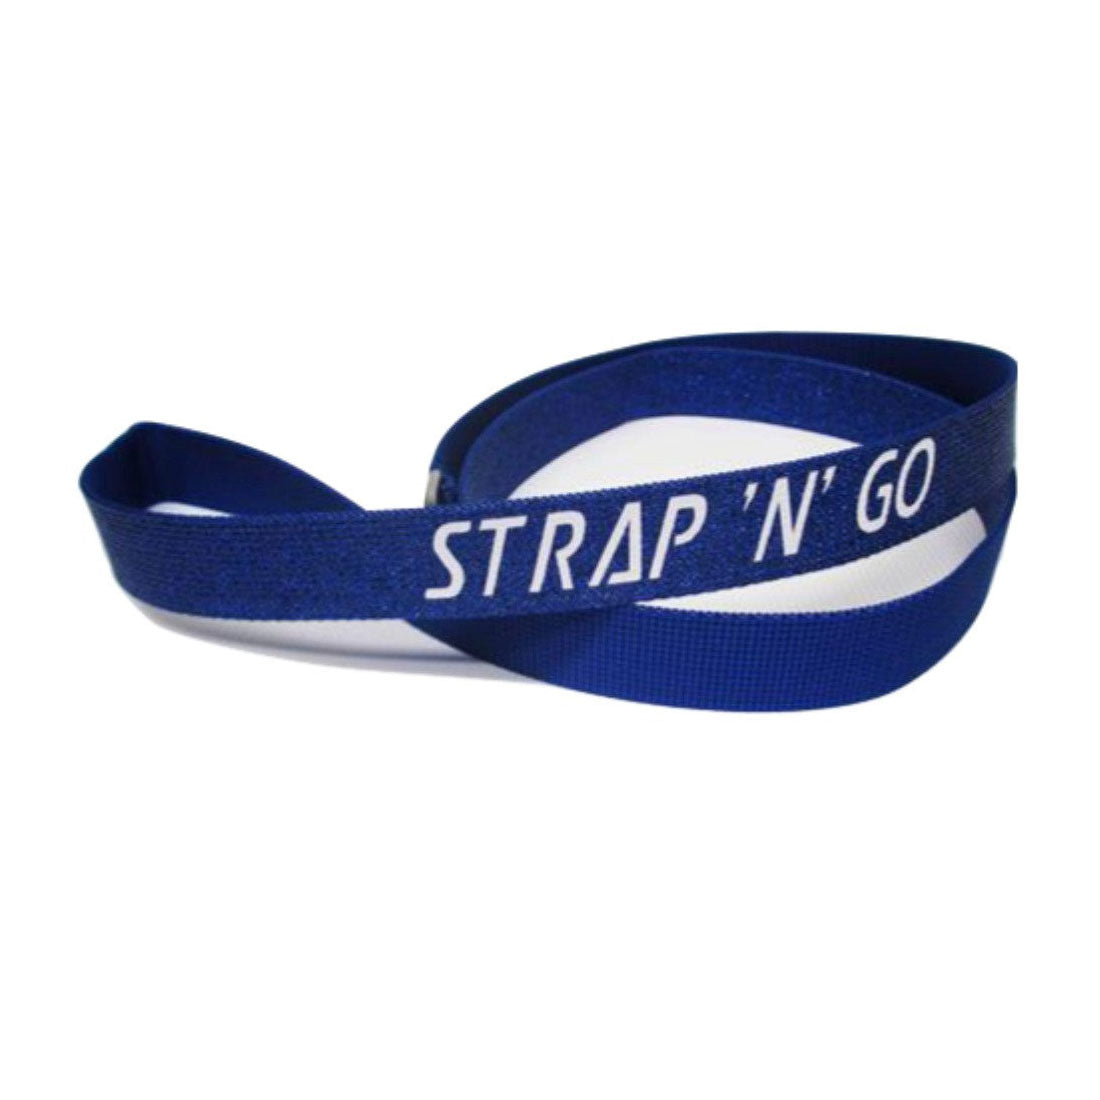 Strap N Go Skate Noose/Leash - Glitter Glitter Blue Roller Skate Accessories